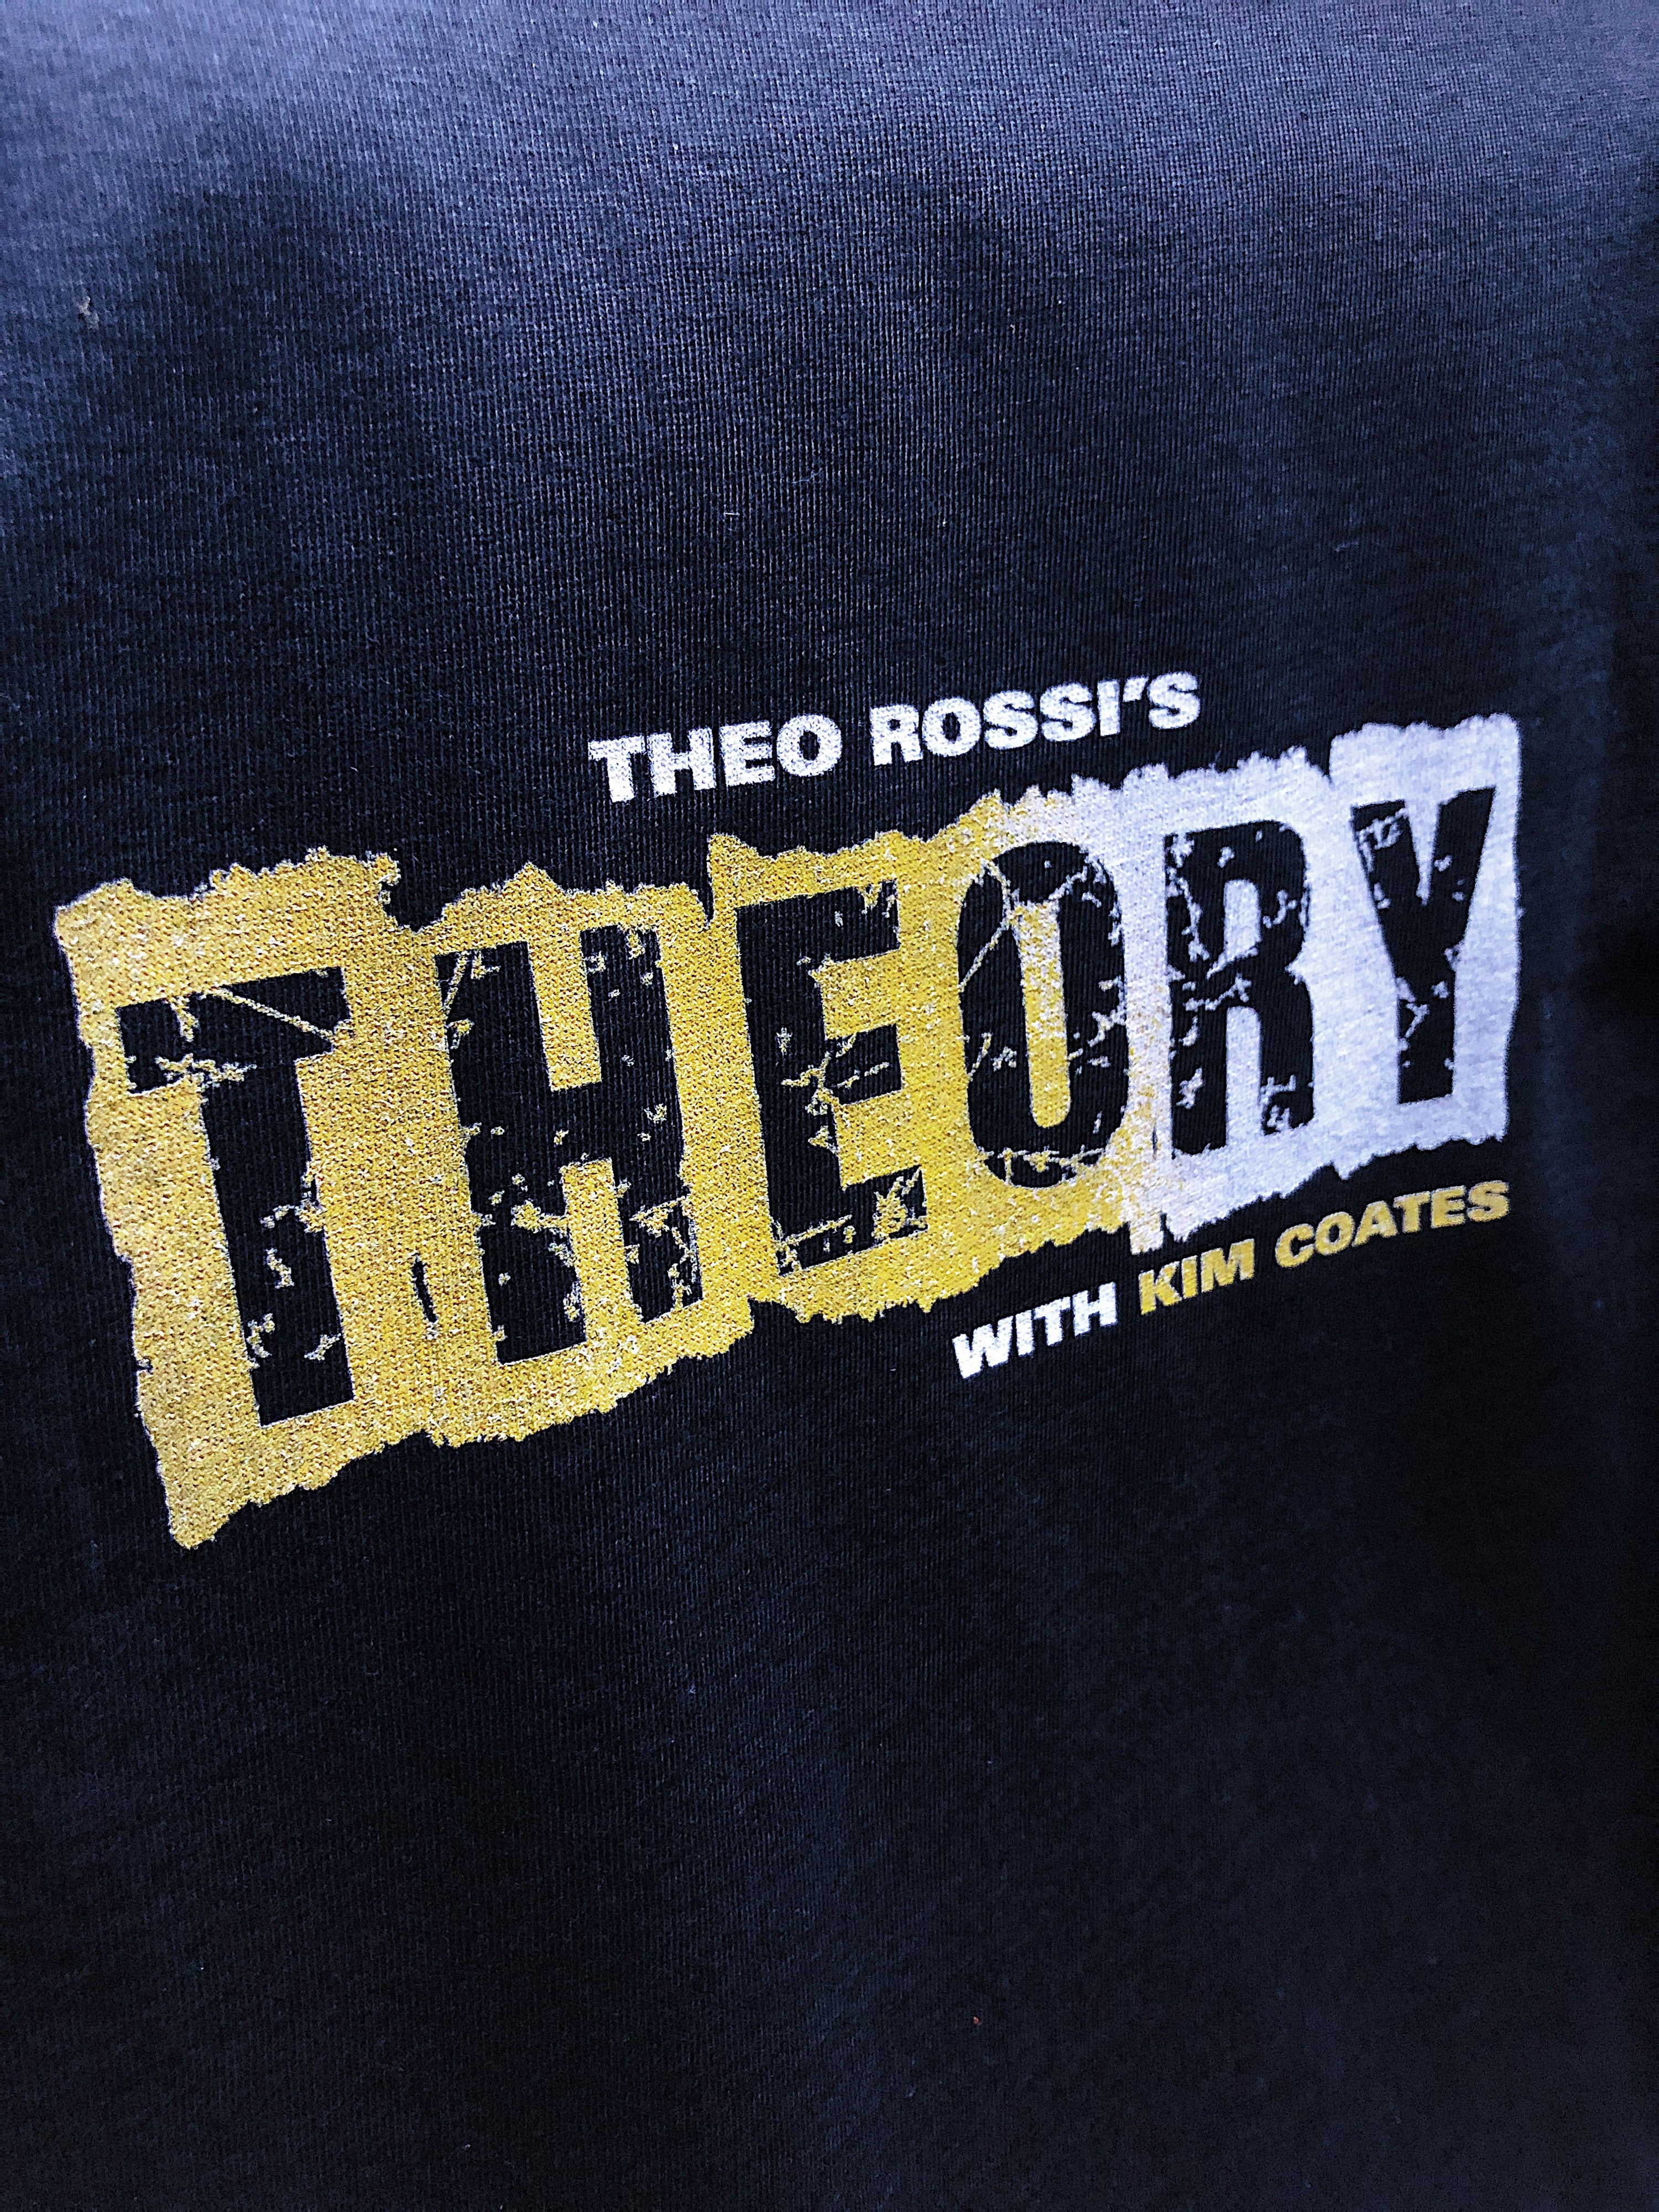 THEOry Logo Tee